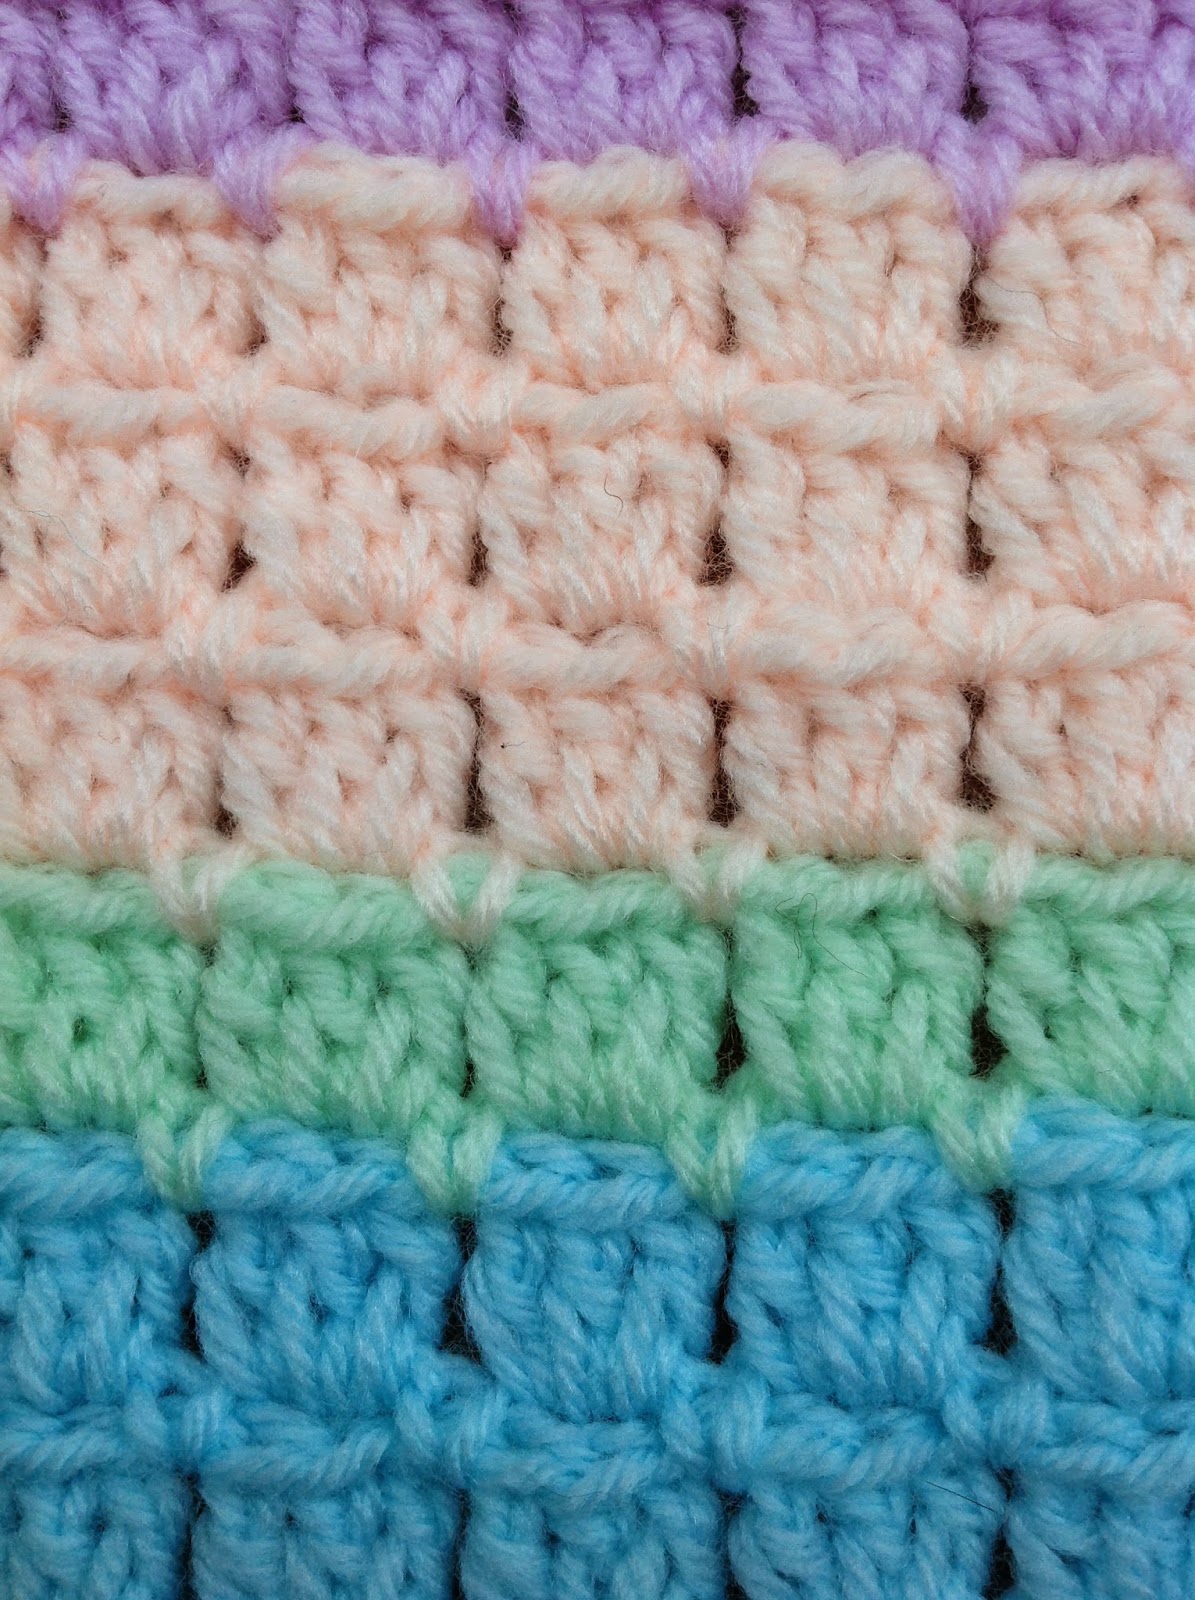 Download OYA's WORLD- Crochet-Knitting: Crochet: BLOCK STITCH Baby Blanket